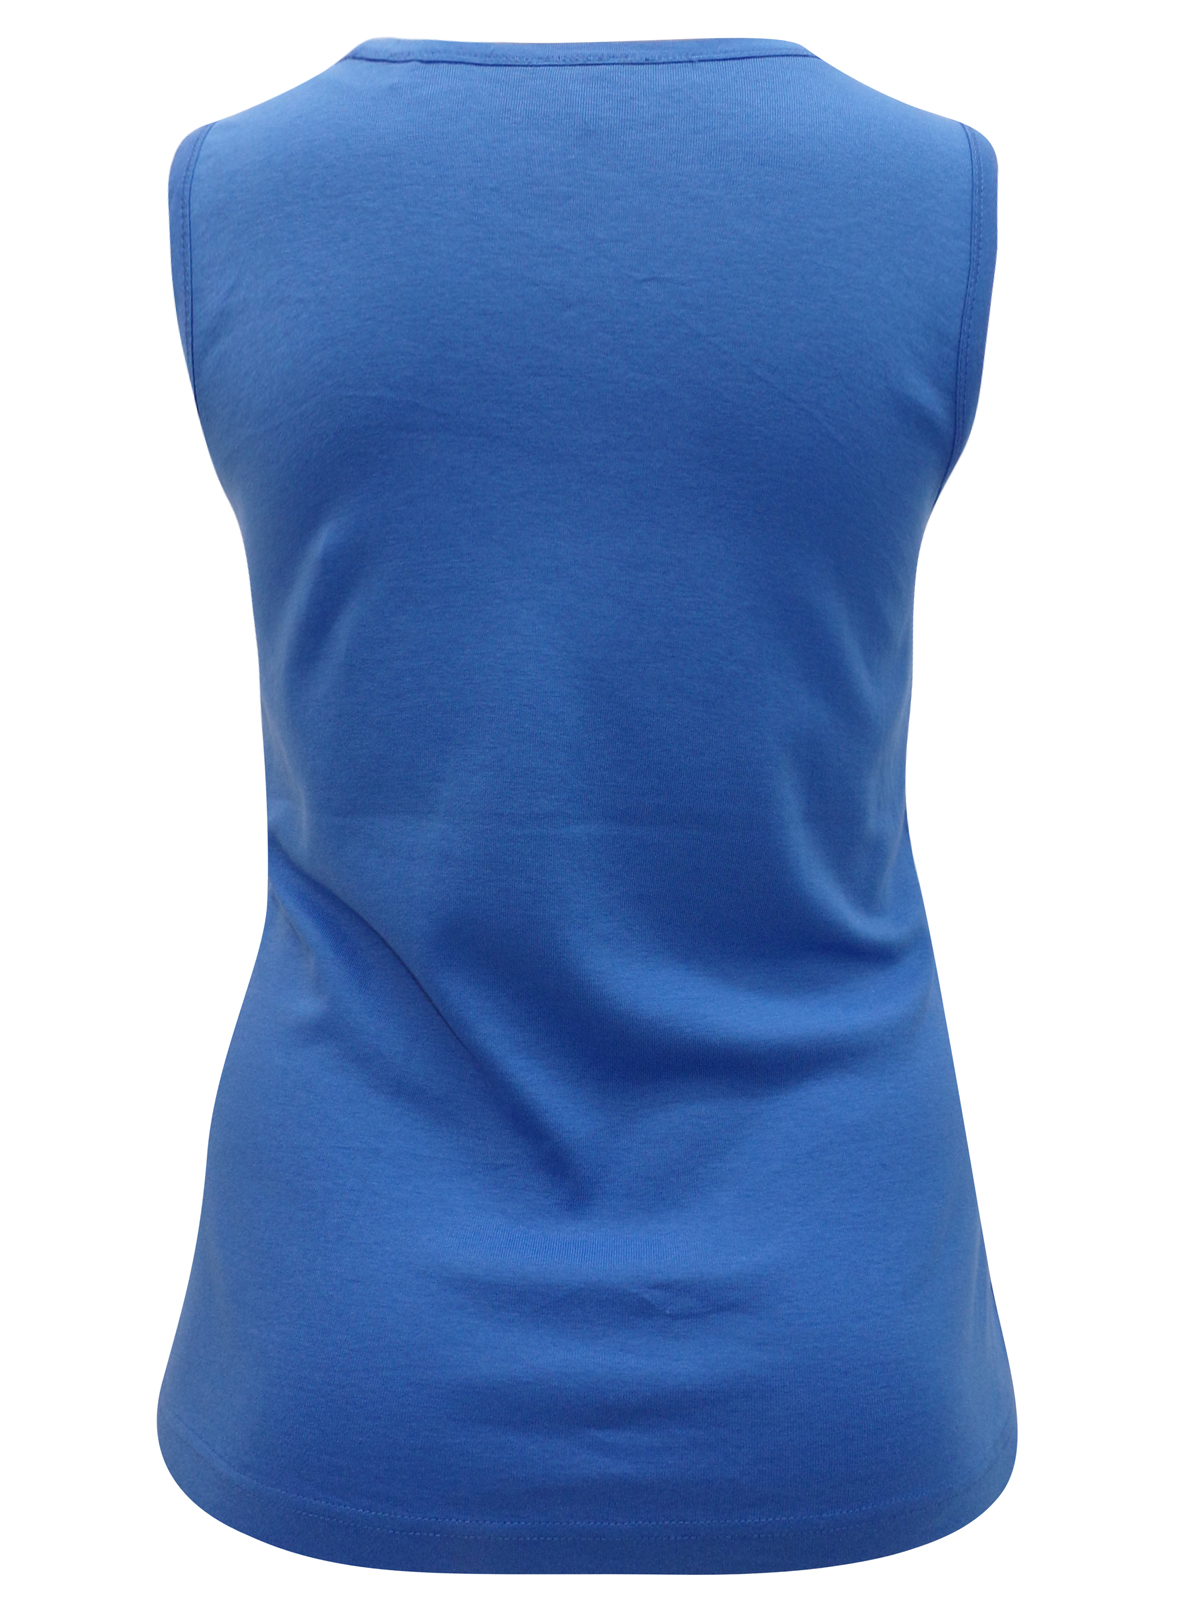 S.Oliver - Triangle - - Triangle BLUE Pure Cotton Sleeveless Vest ...